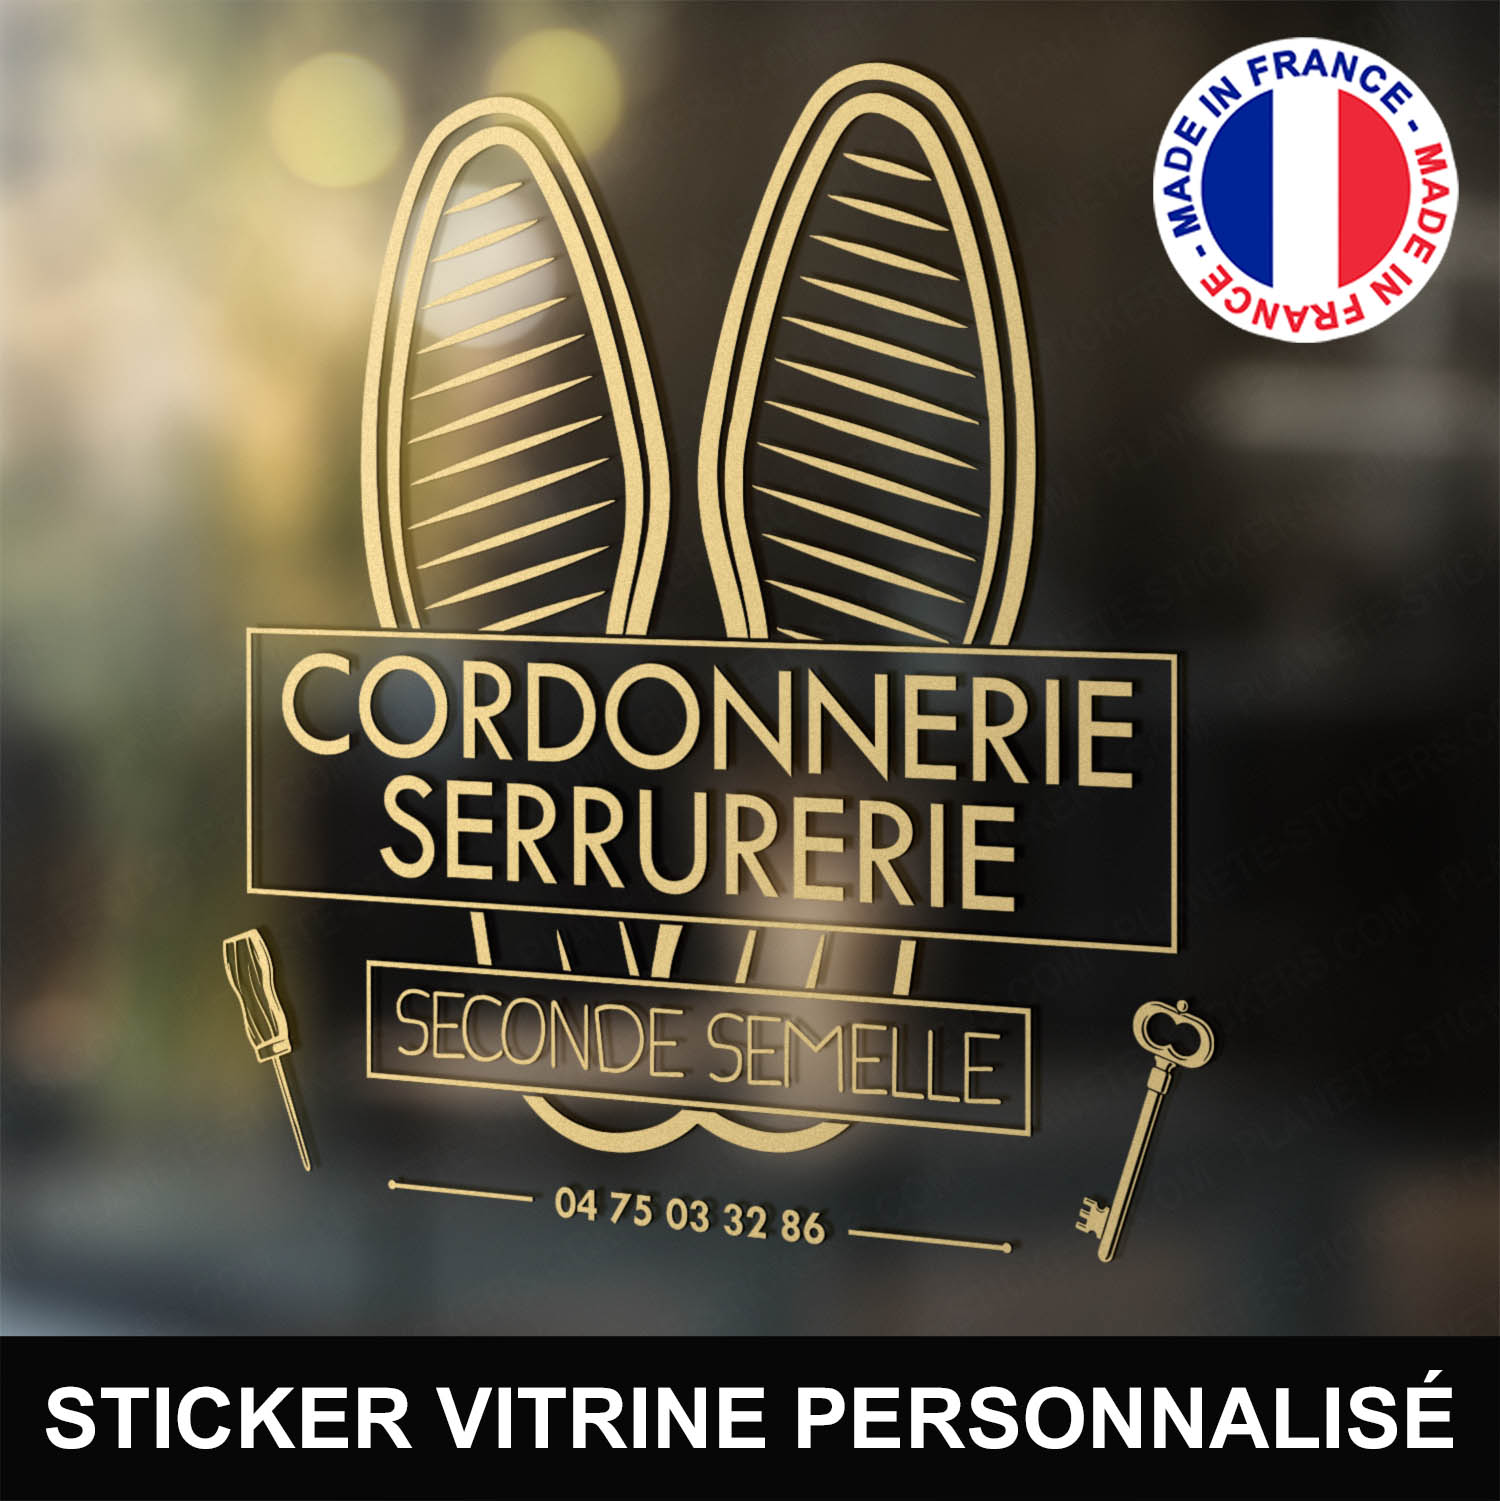 ref2cordonniervitrine-stickers-cordonnerie-serrurerie-vitrine-sticker-personnalisé-autocollant-atelier-chaussure-clef-reparation-pro-professionnel